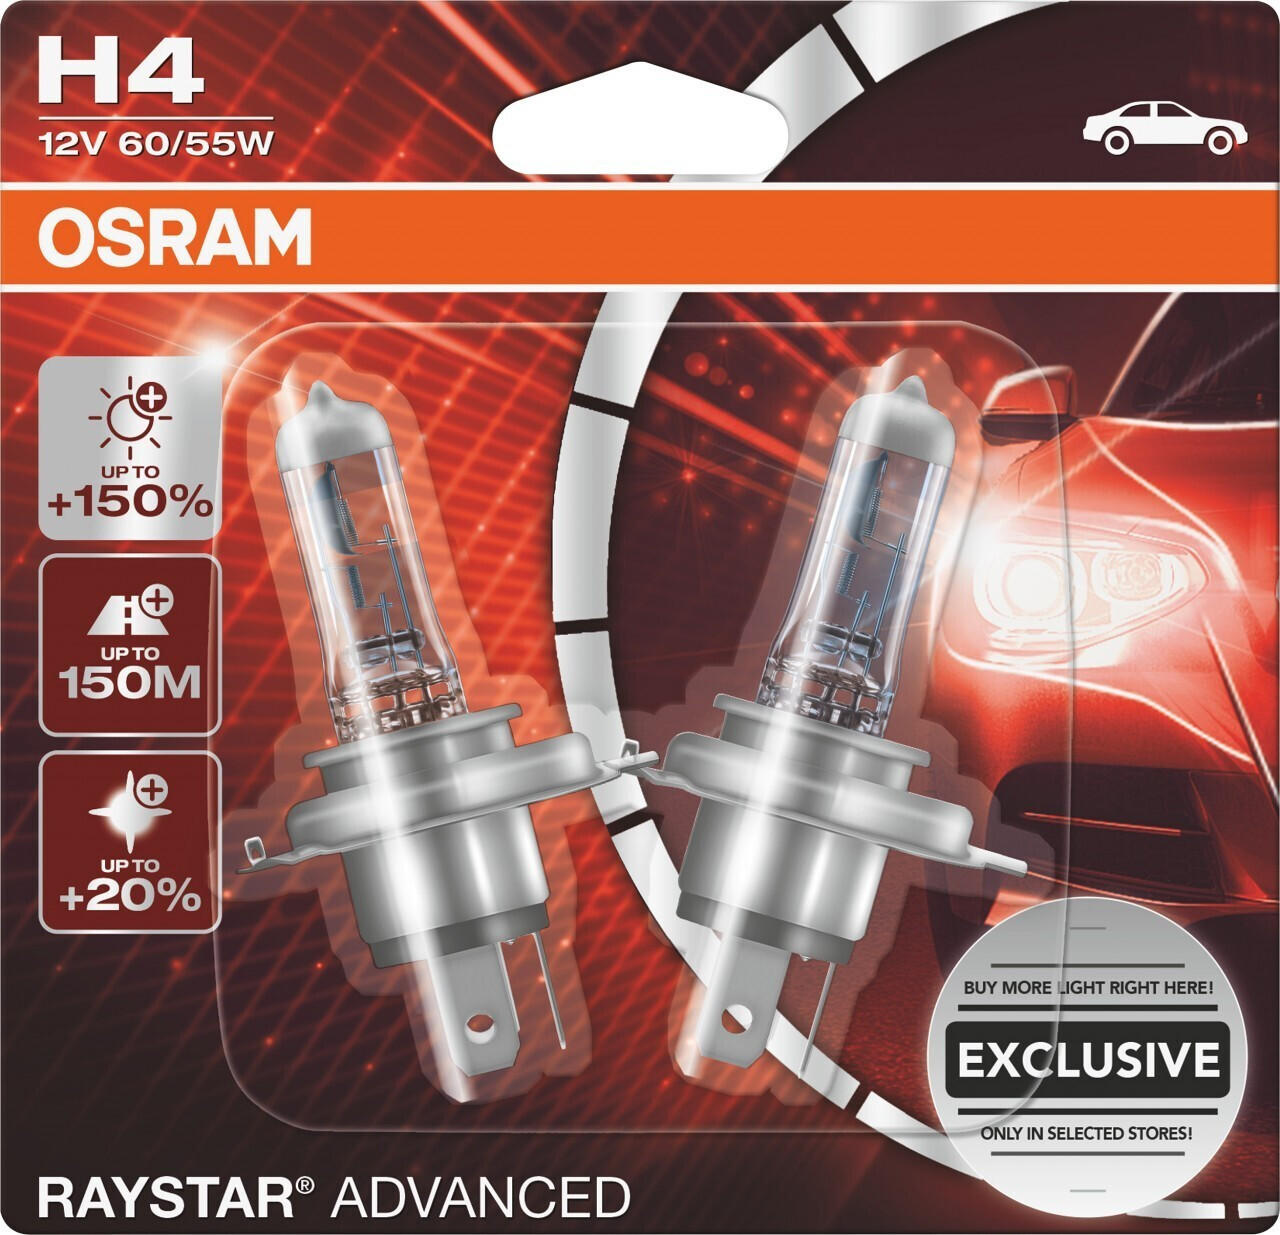 OSRAM 64193NBS Halogen Leuchtmittel Night Breaker® Silver H4 60